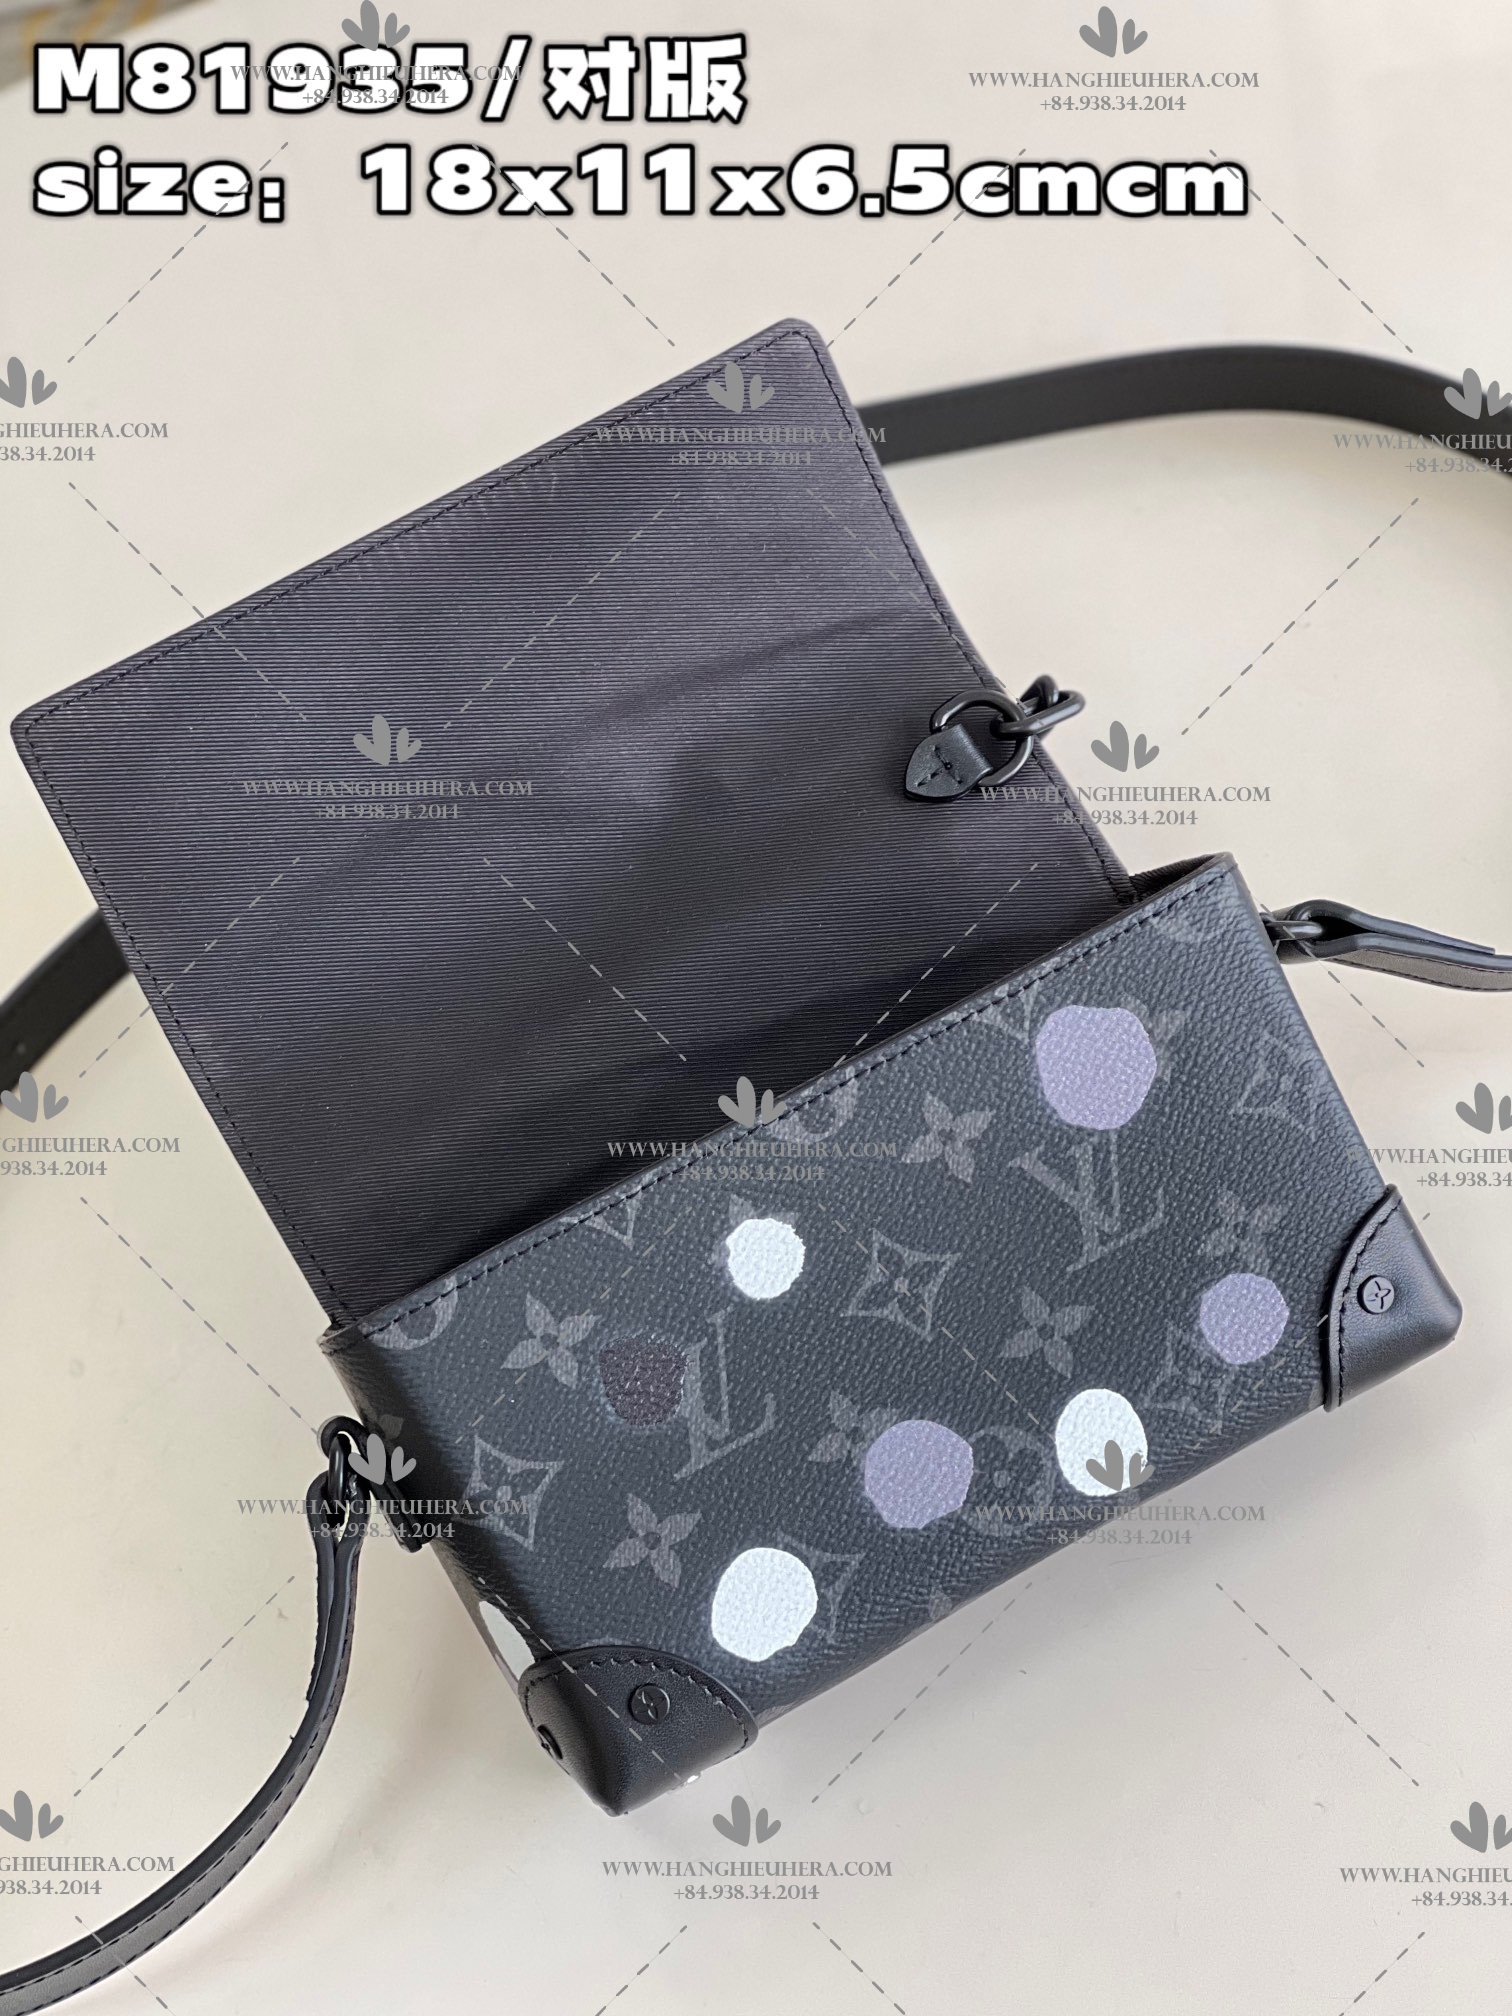 Louis vuitton x YK Steamer Wearable Wallet bag